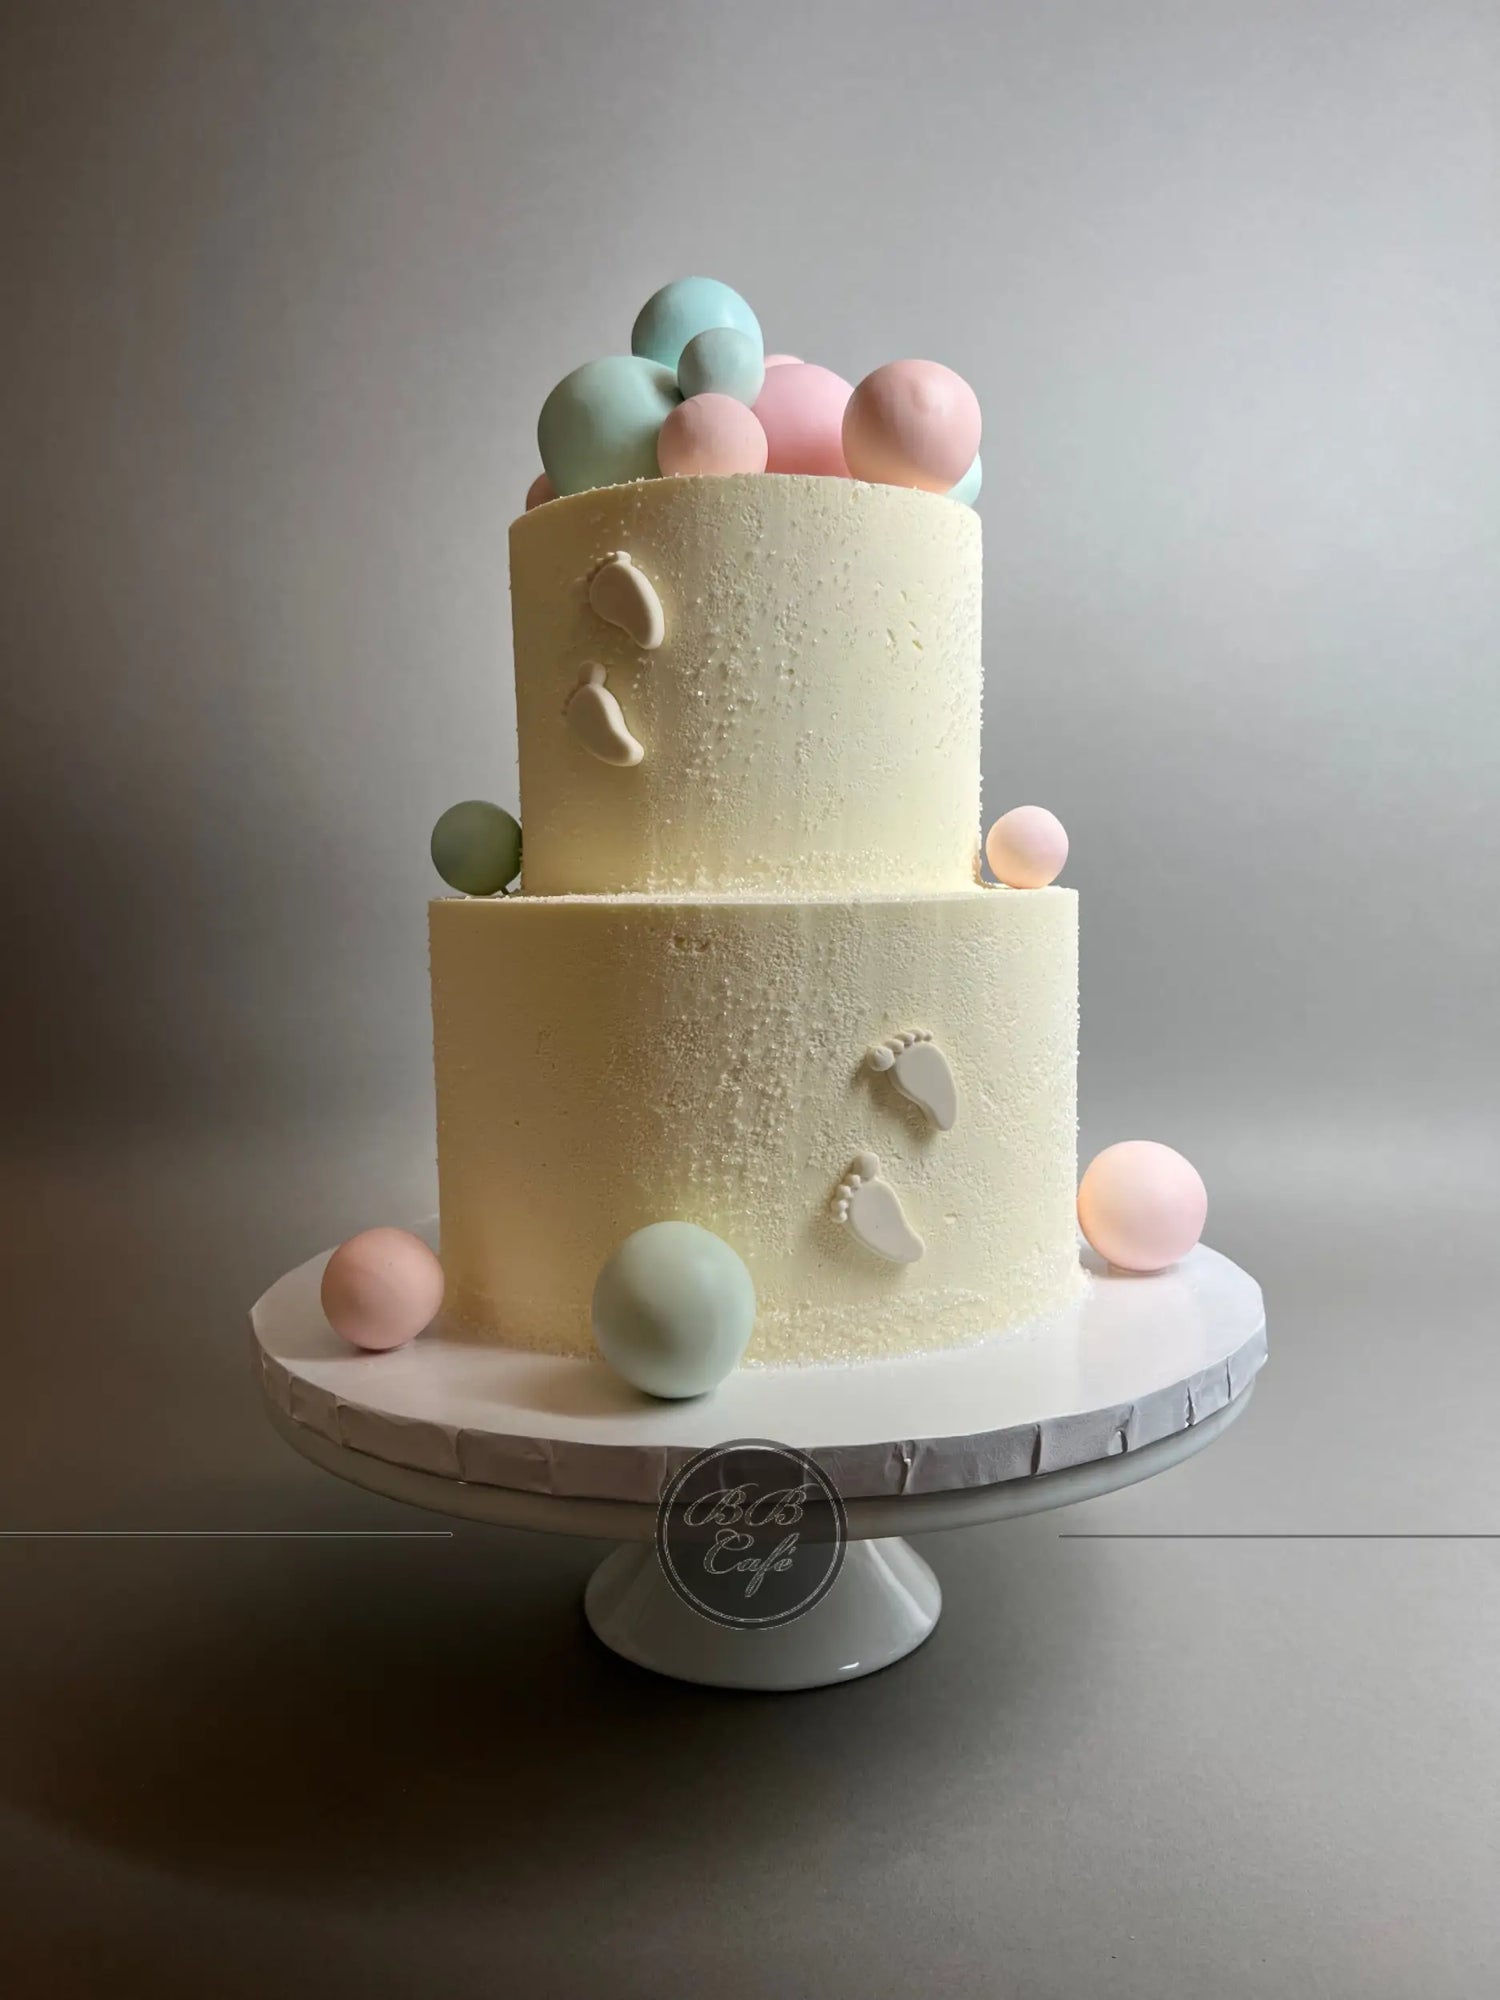 Spheres and footprints on buttercream - custom cake